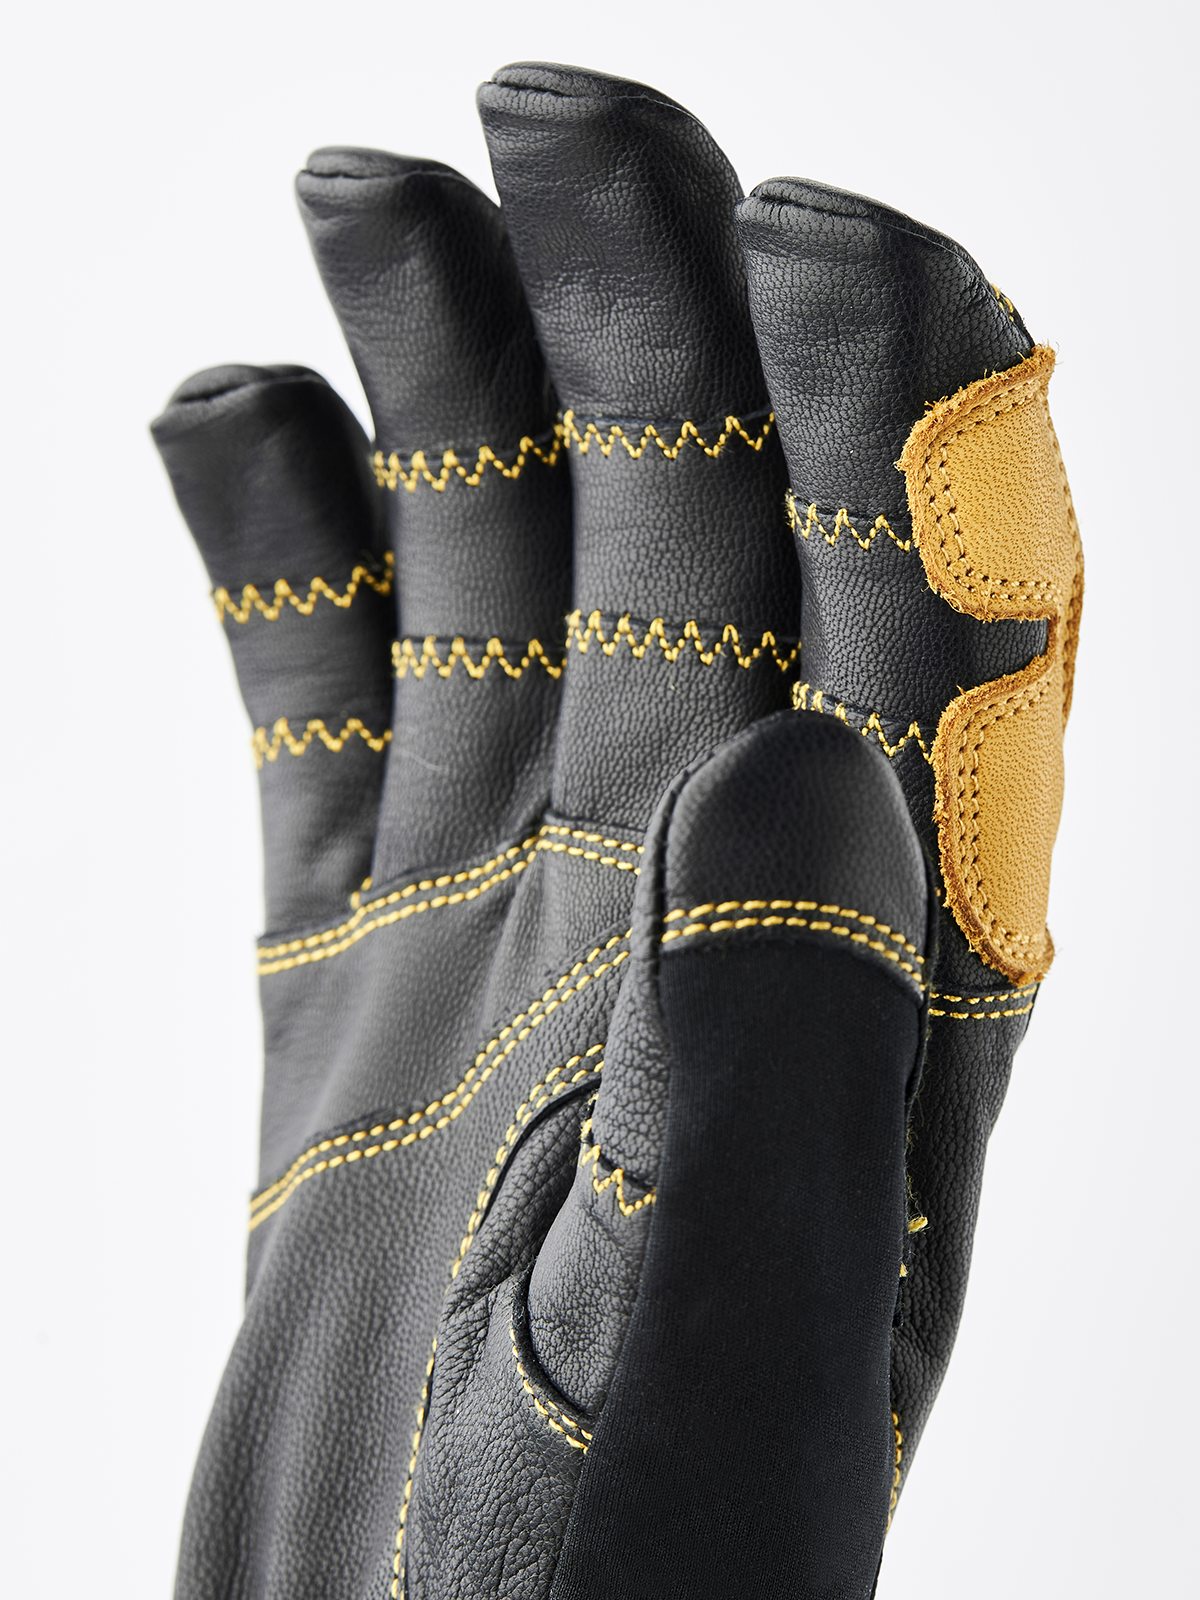 Ergo Grip Active 5-finger - Black | Hestra Gloves